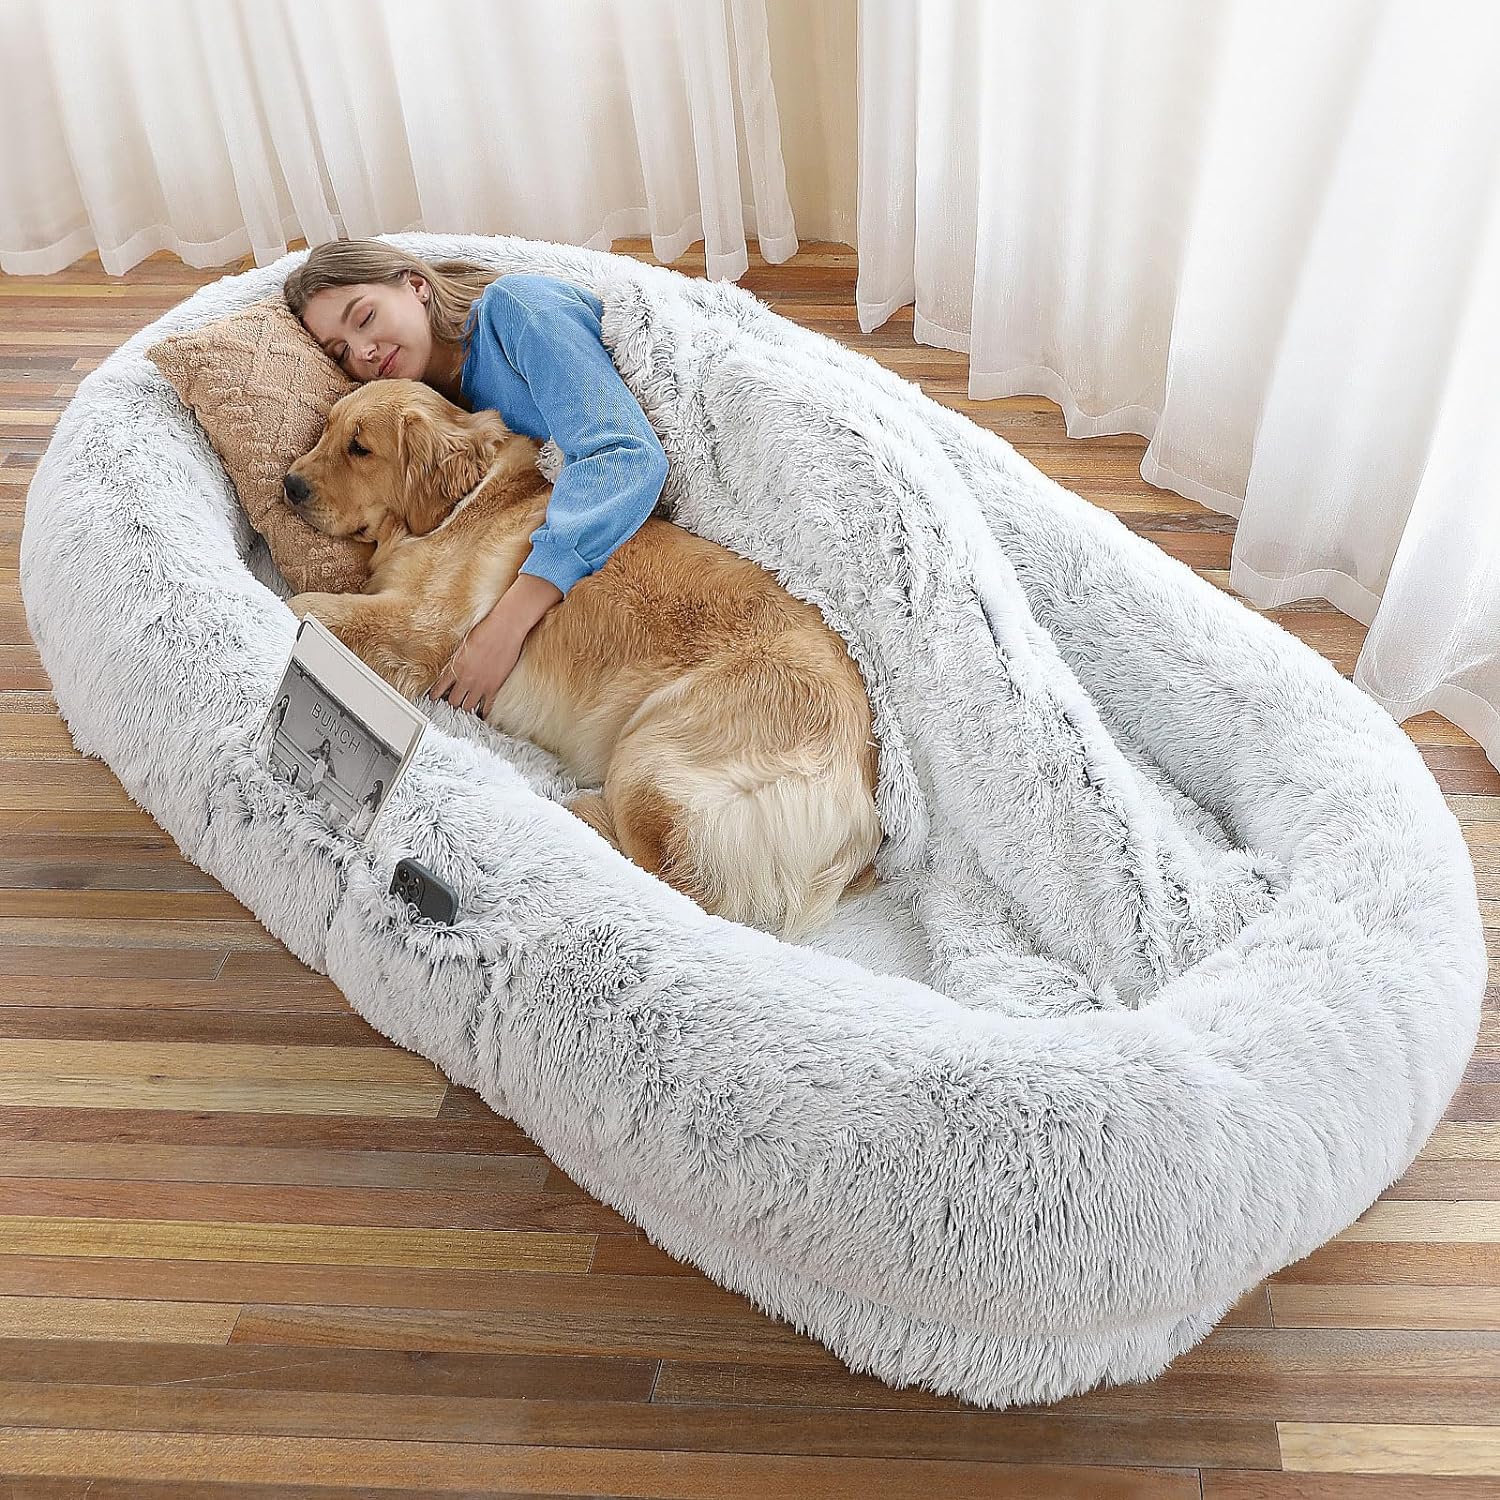 WROS Human Dog Bed